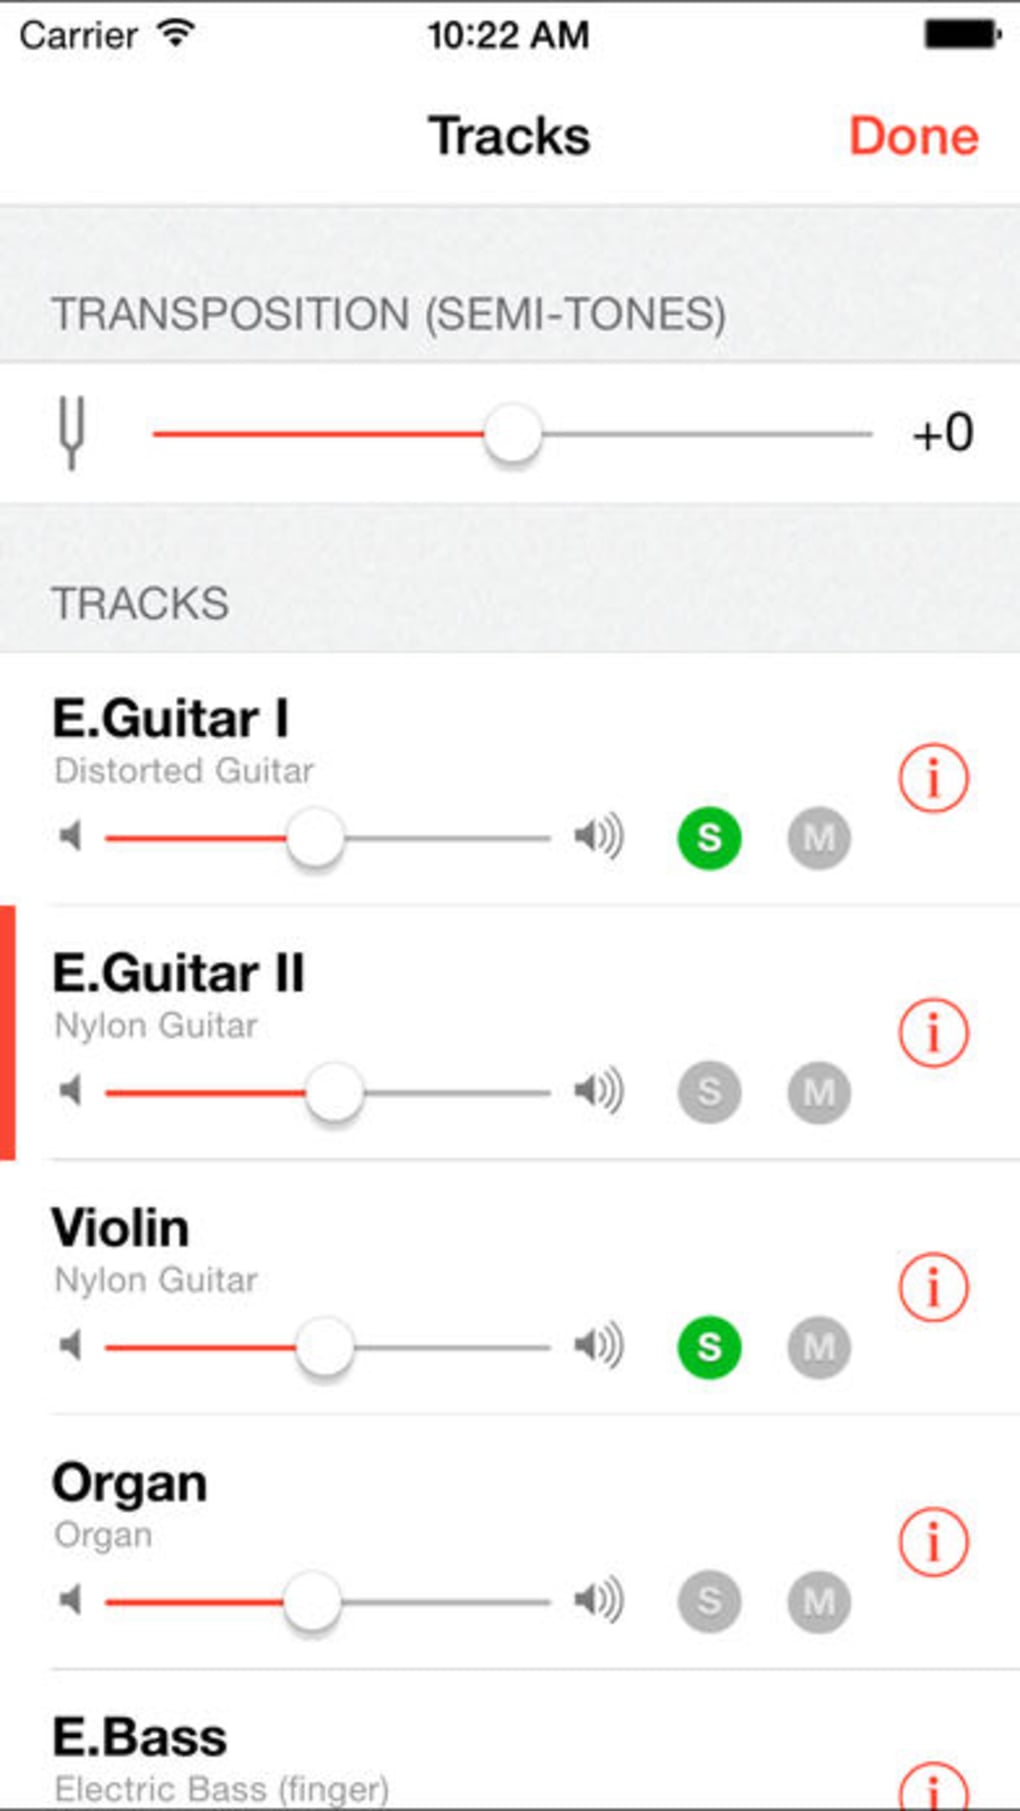 guitar pro app iphone download